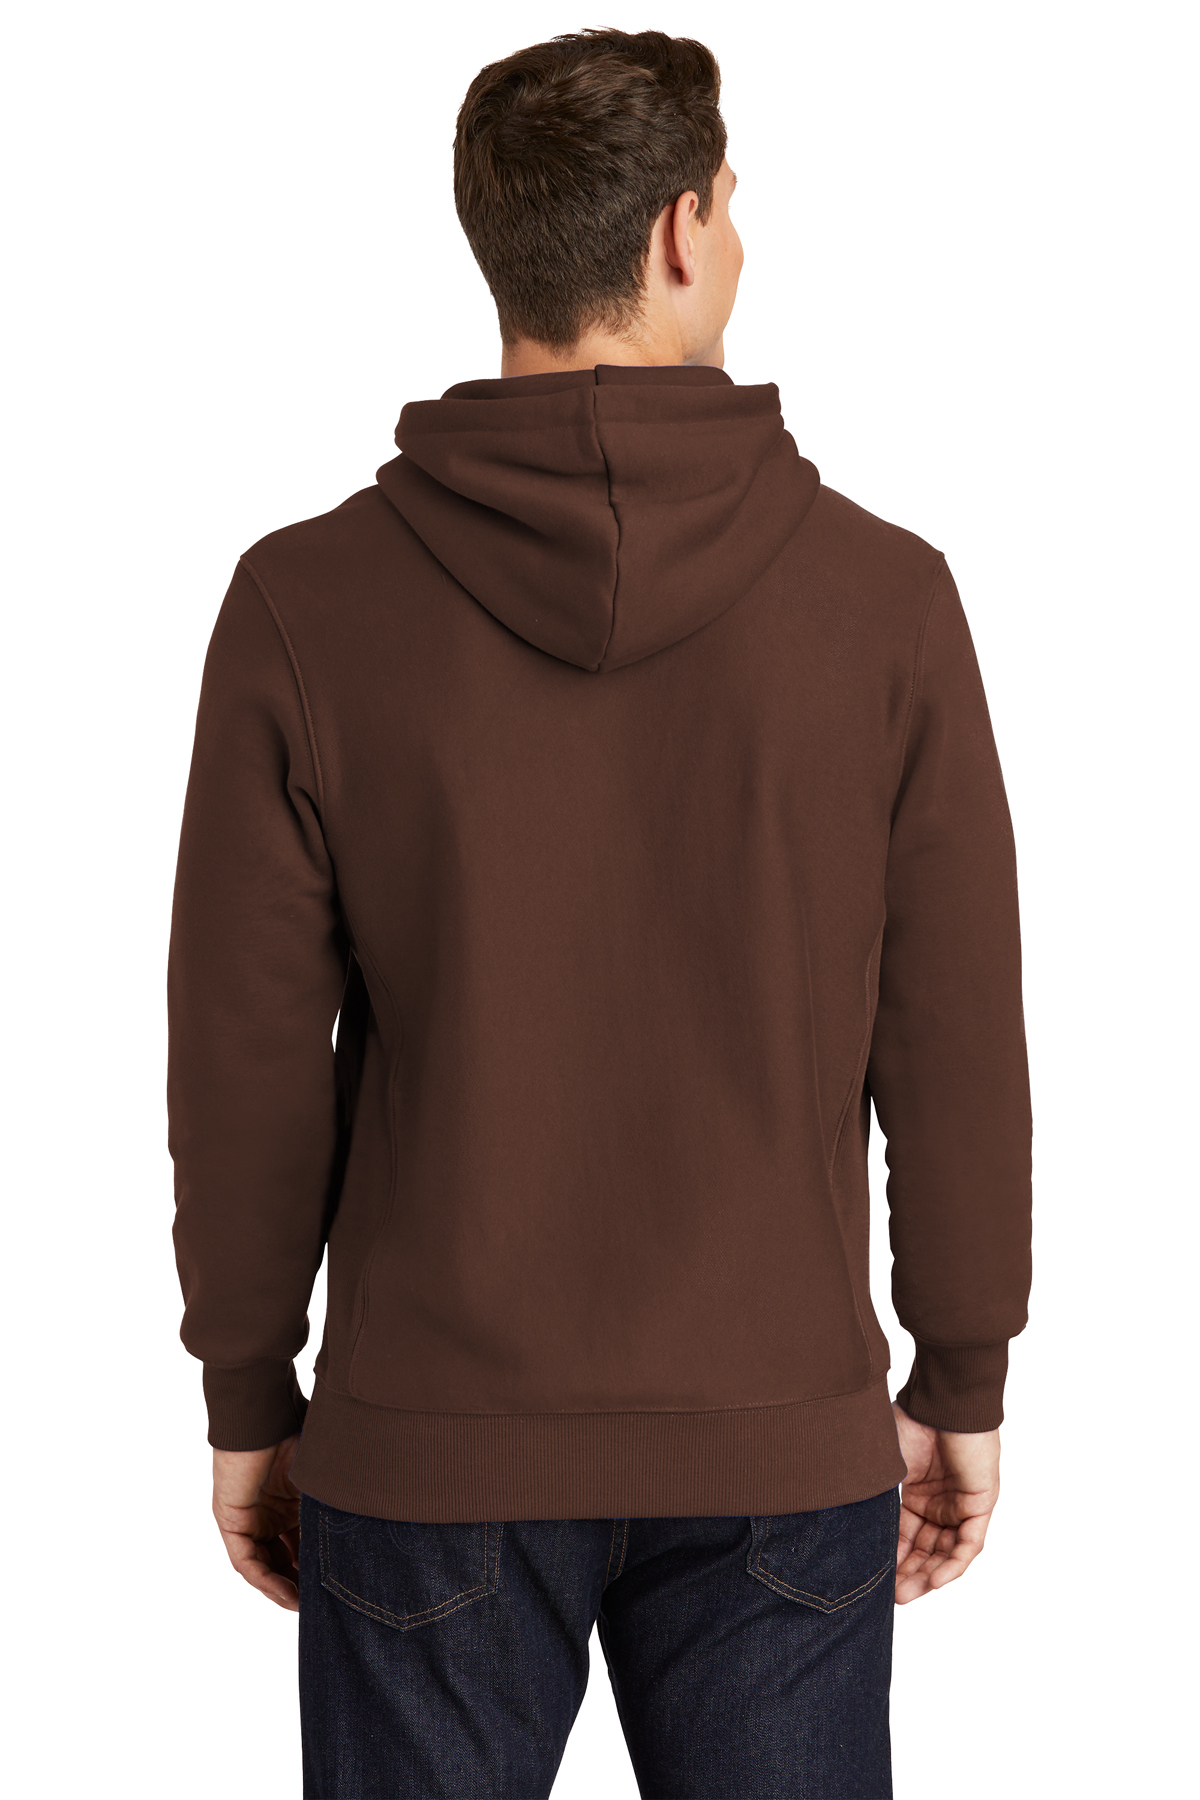 Details about   Levelwear Junior Basic Tech Hoodie Sweatshirt 